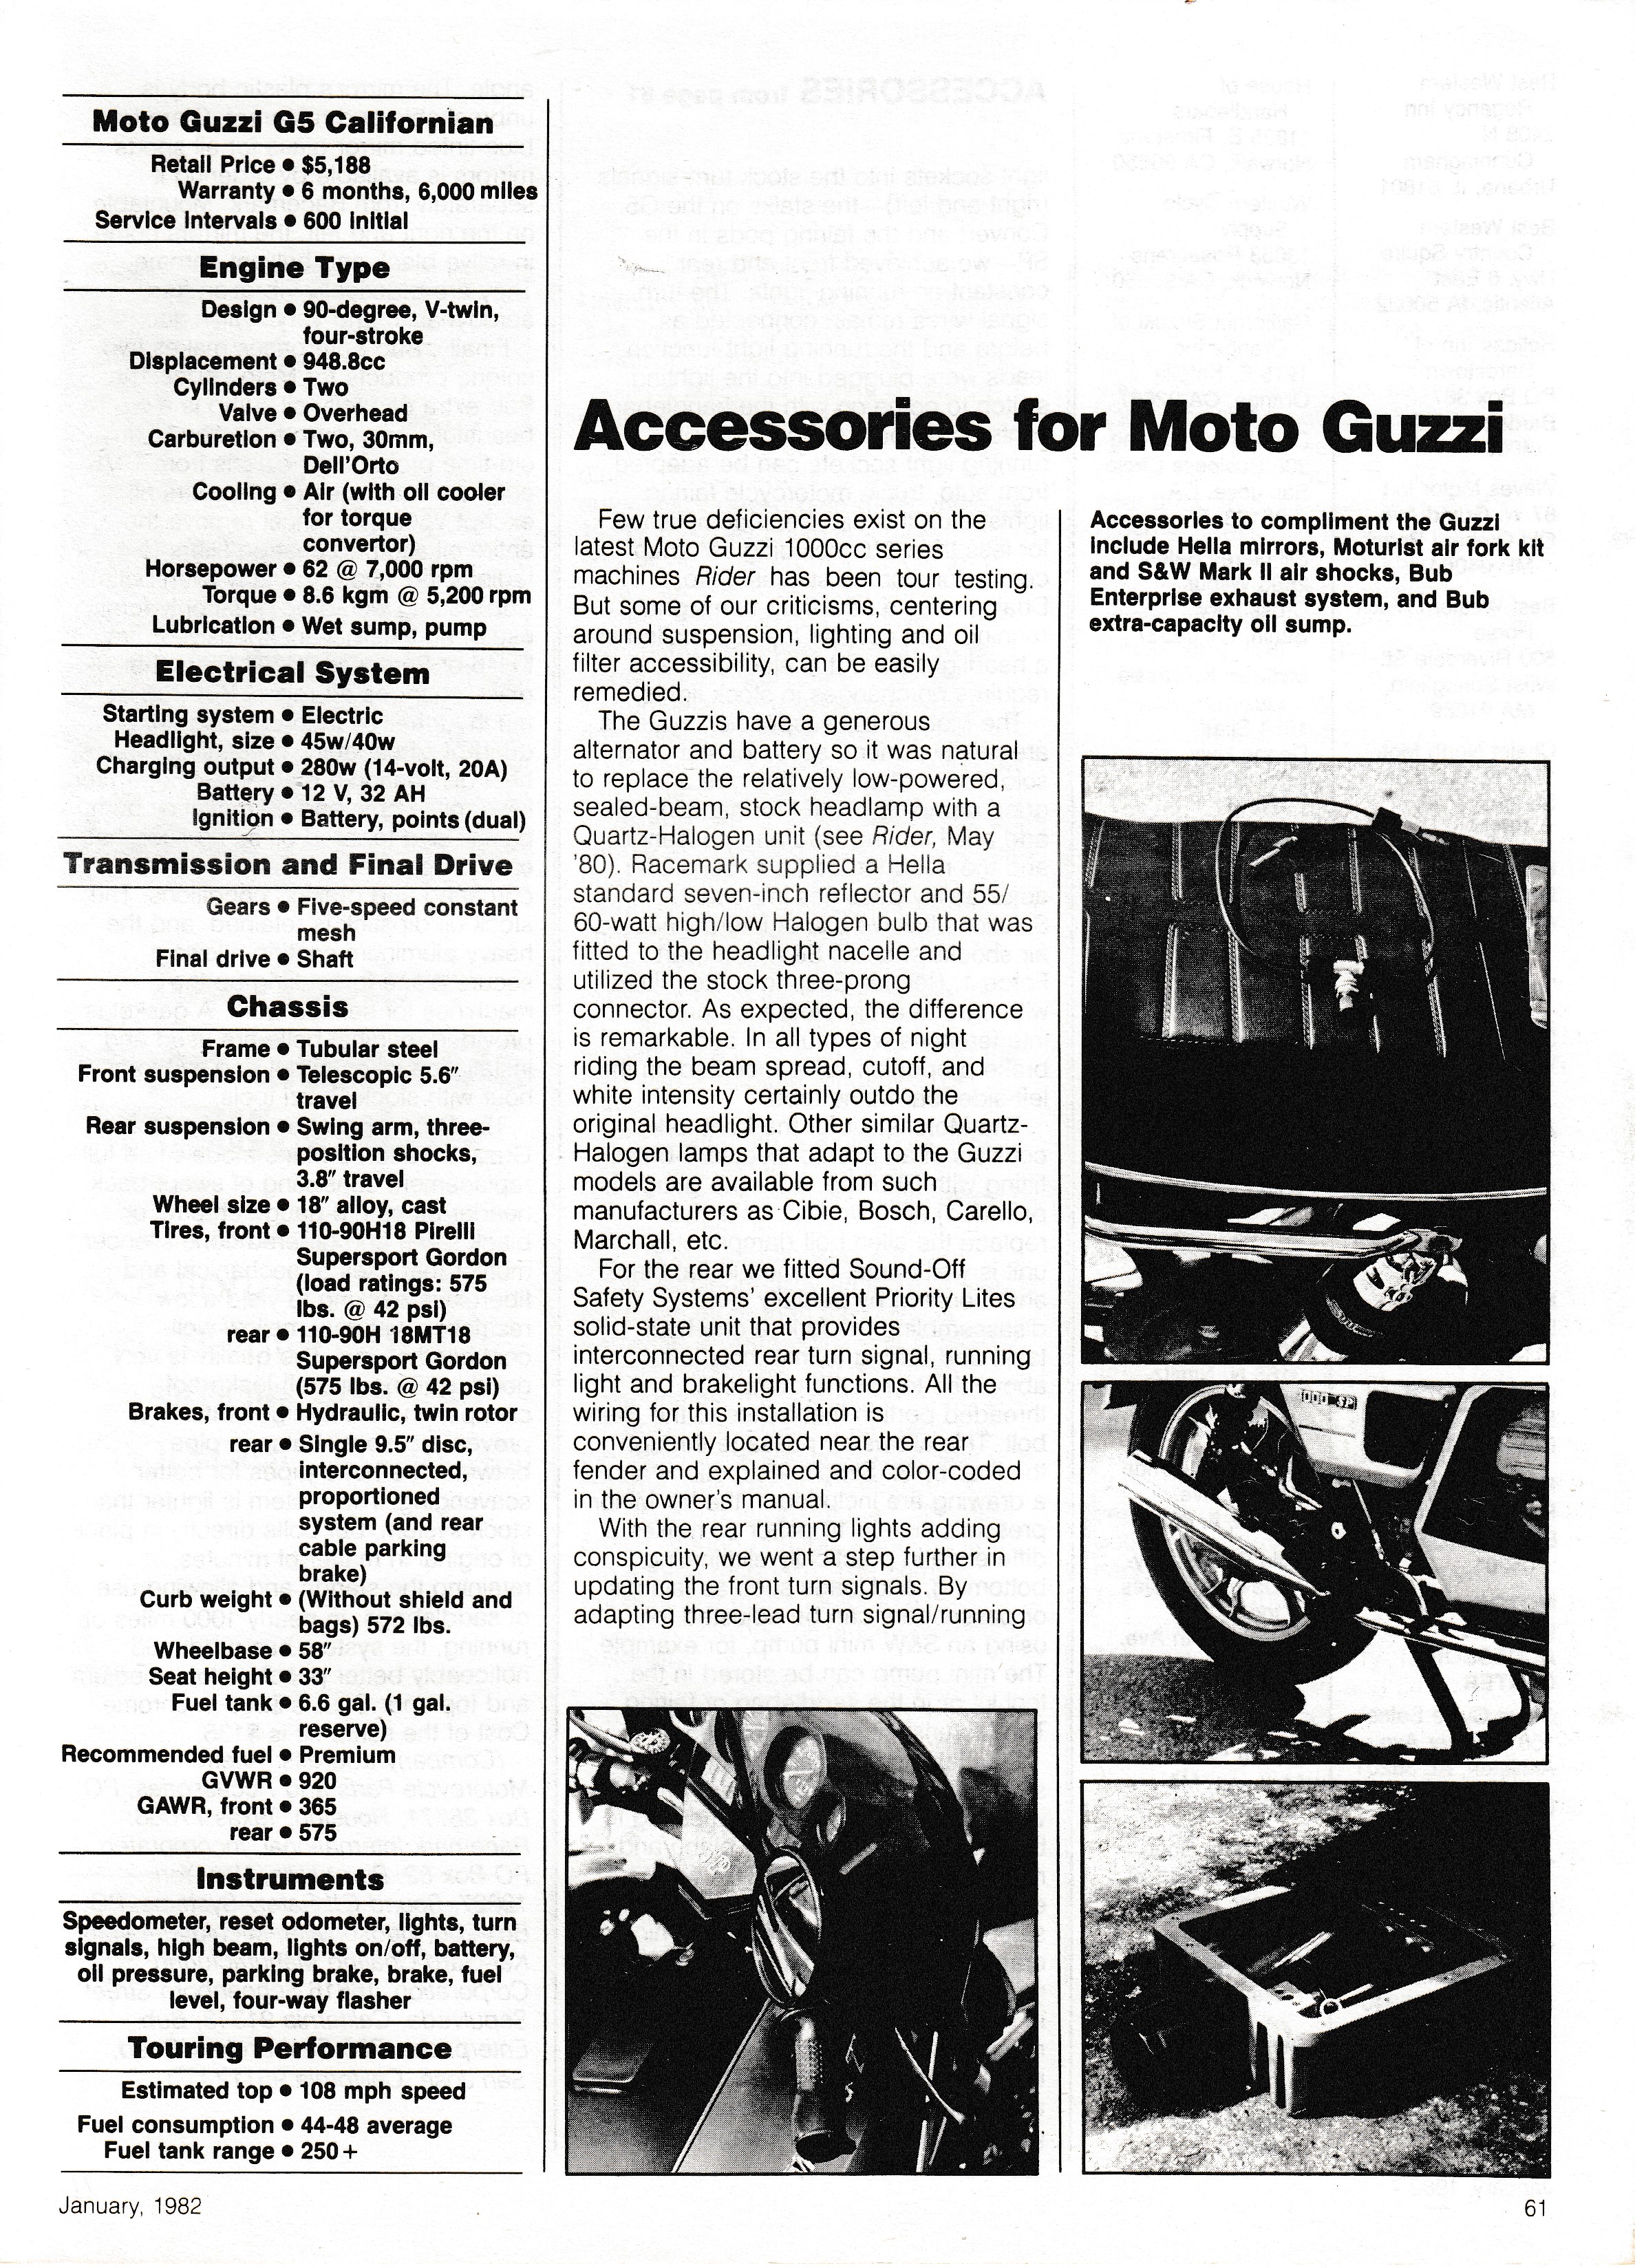 Article - Rider (1982 January) Tour-testing Moto Guzzi G5 Californian